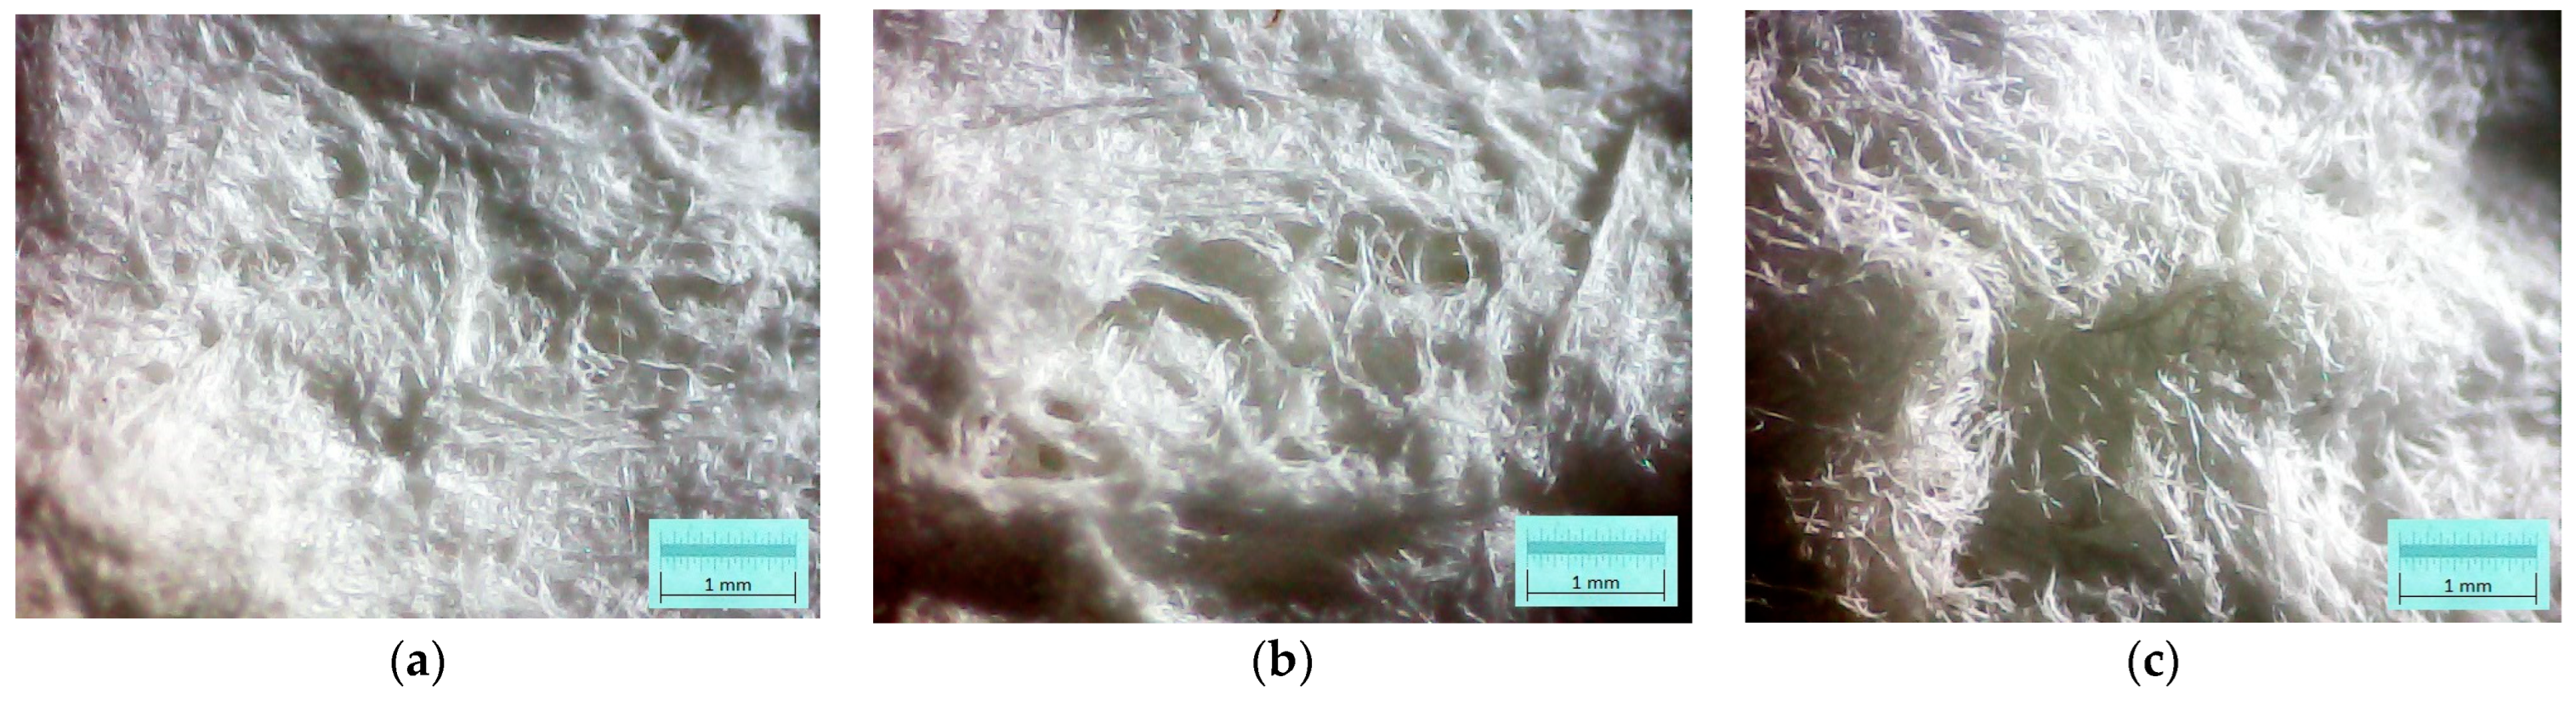 Multiscale modeling of lignocellulosic foams under compression